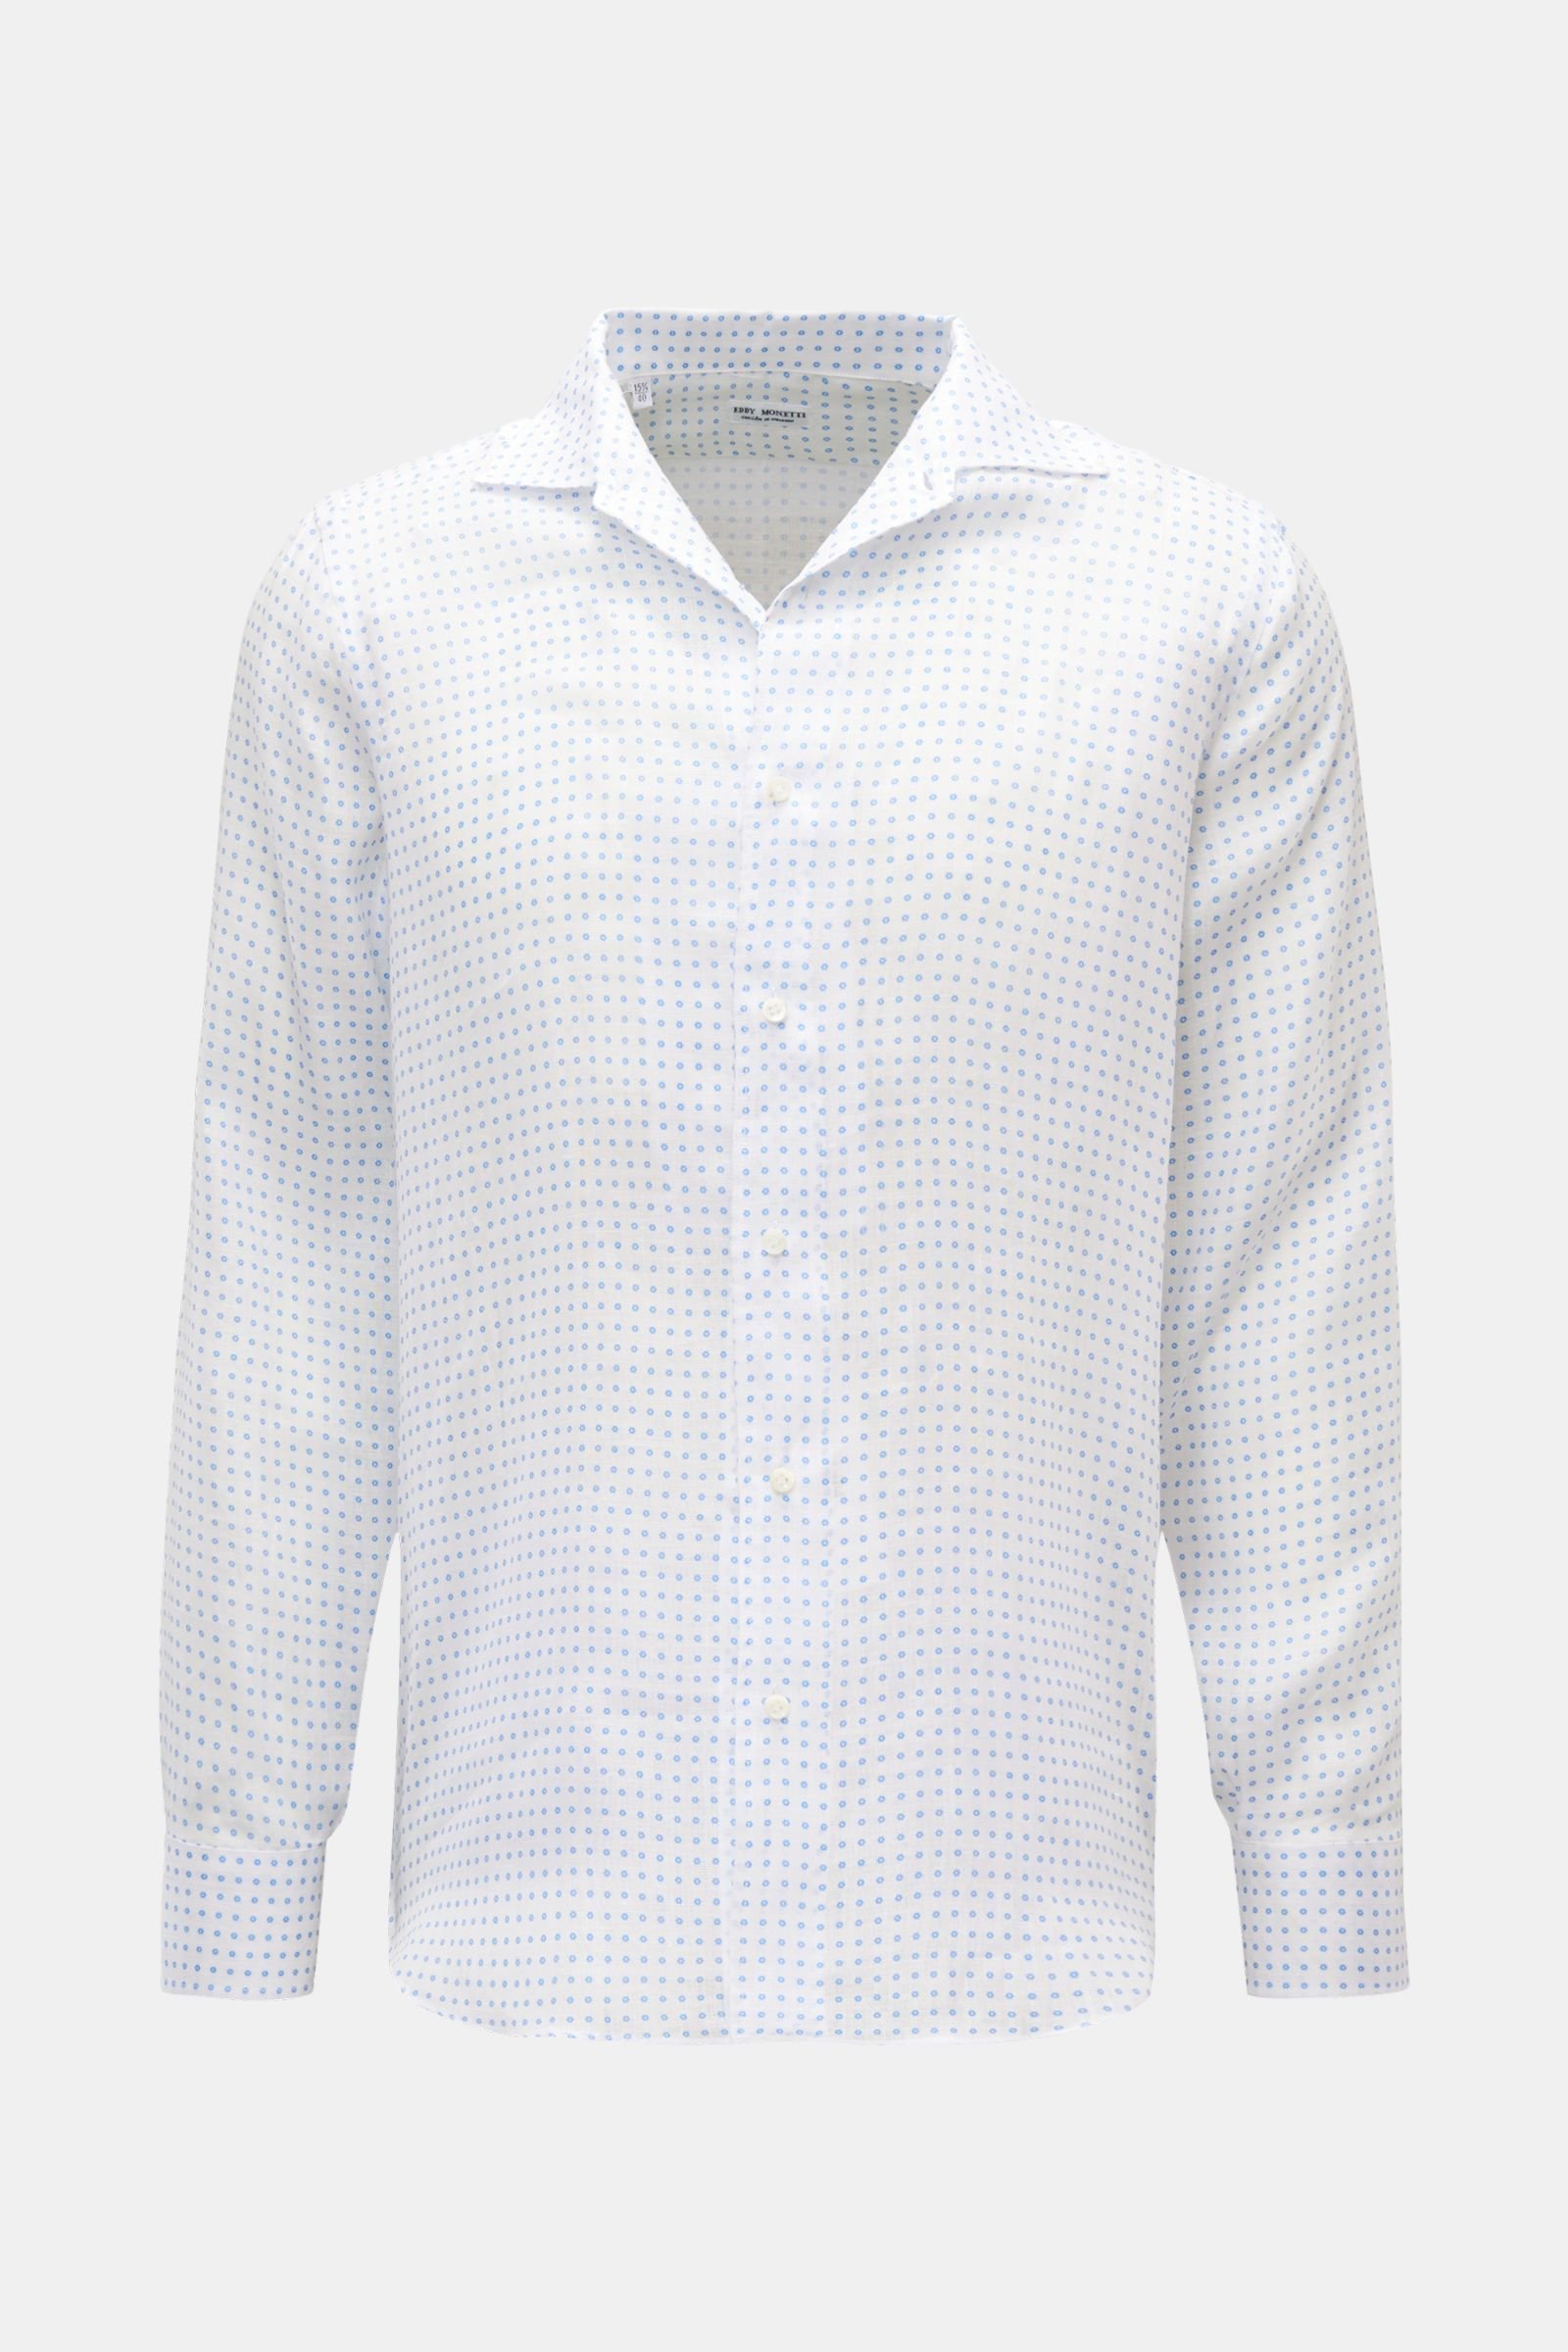 Linen shirt shark collar white/blue patterned